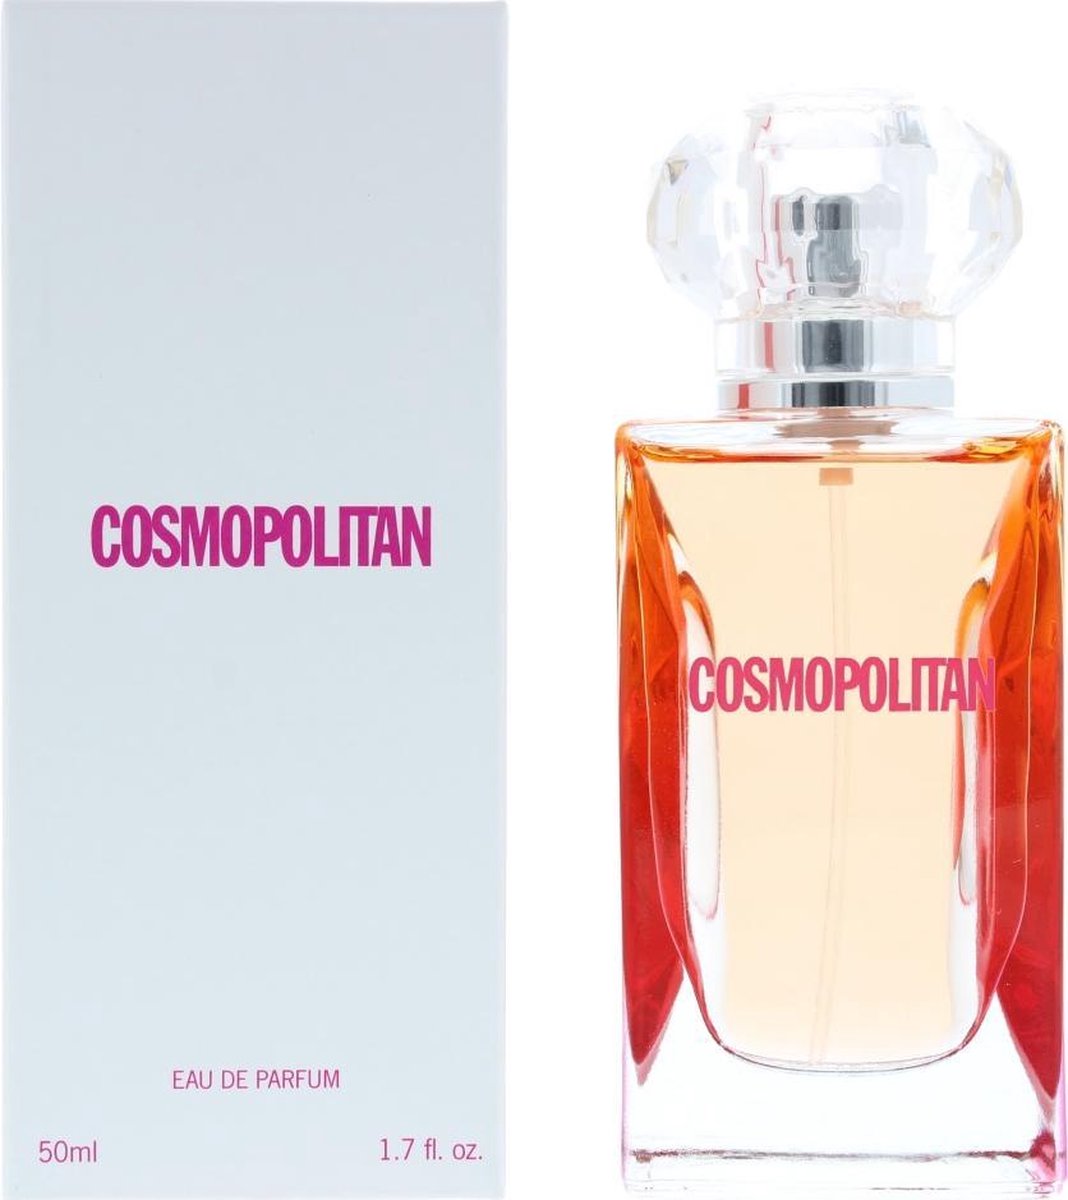 Cosmopolitan - 50ml - Eau de parfum